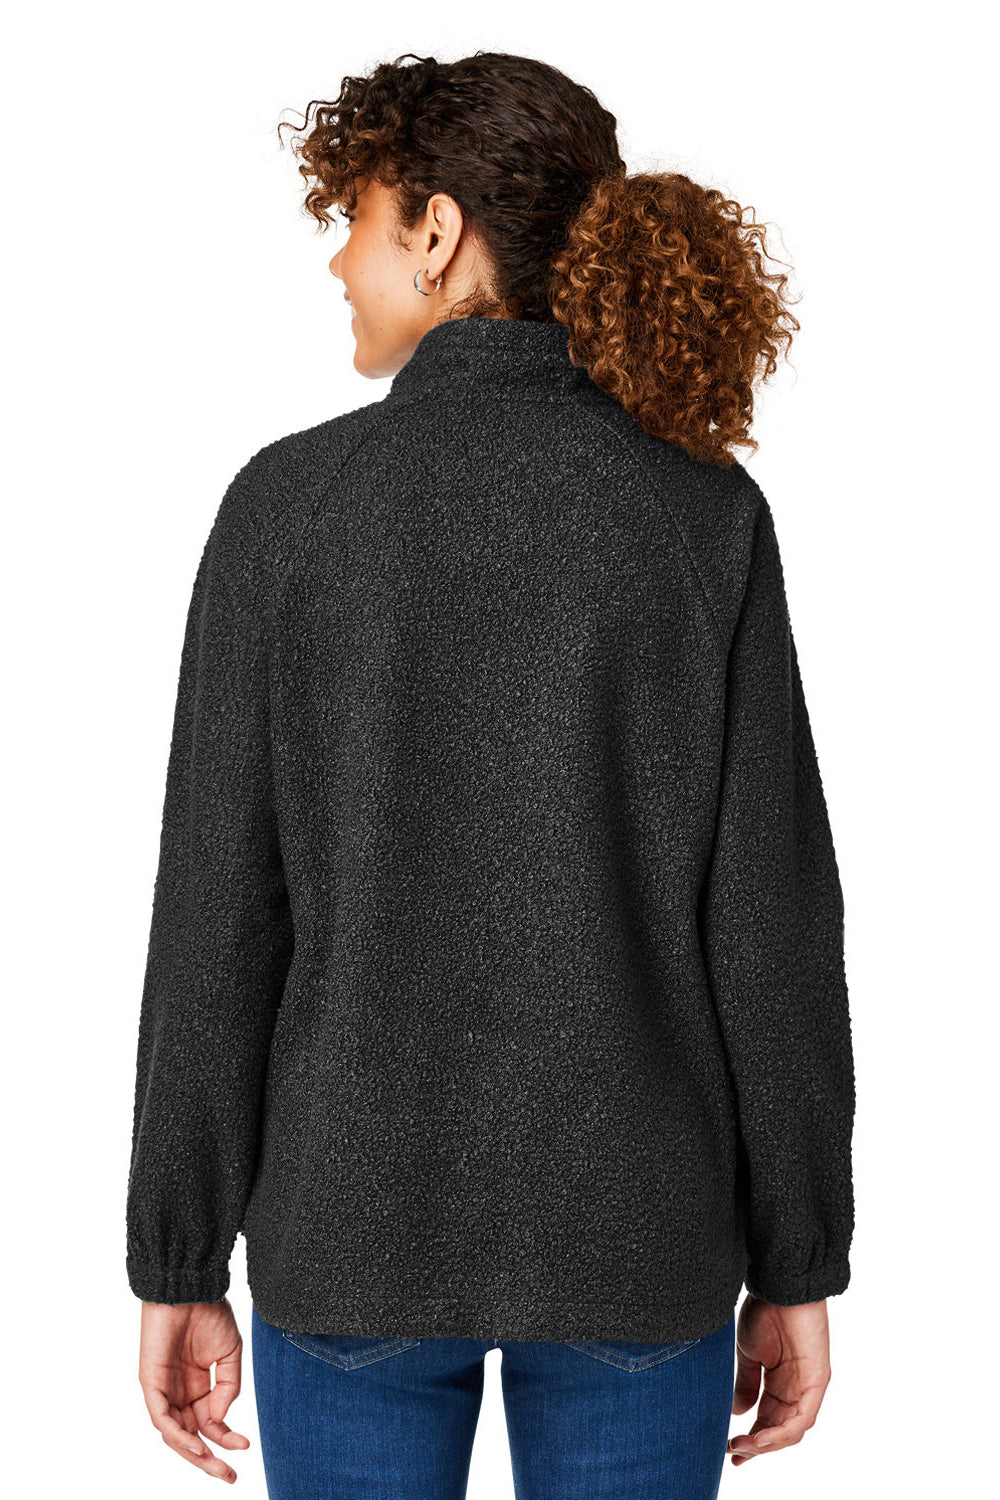 North End NE713W Womens Aura Sweater Fleece 1/4 Zip Sweatshirt Black Back